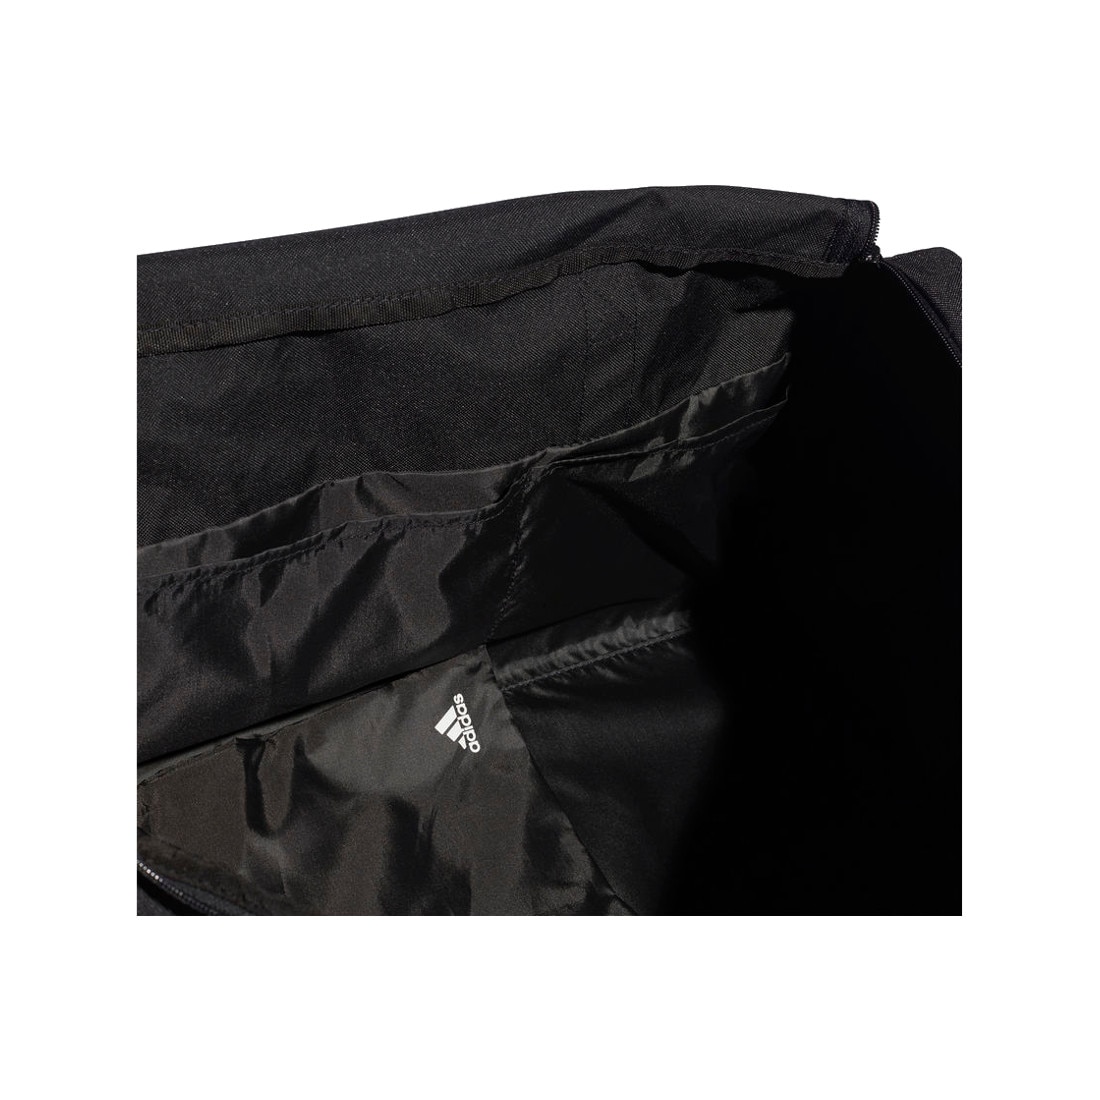 Adidas Performance Bag L S99964 One size EU eMAG.hu